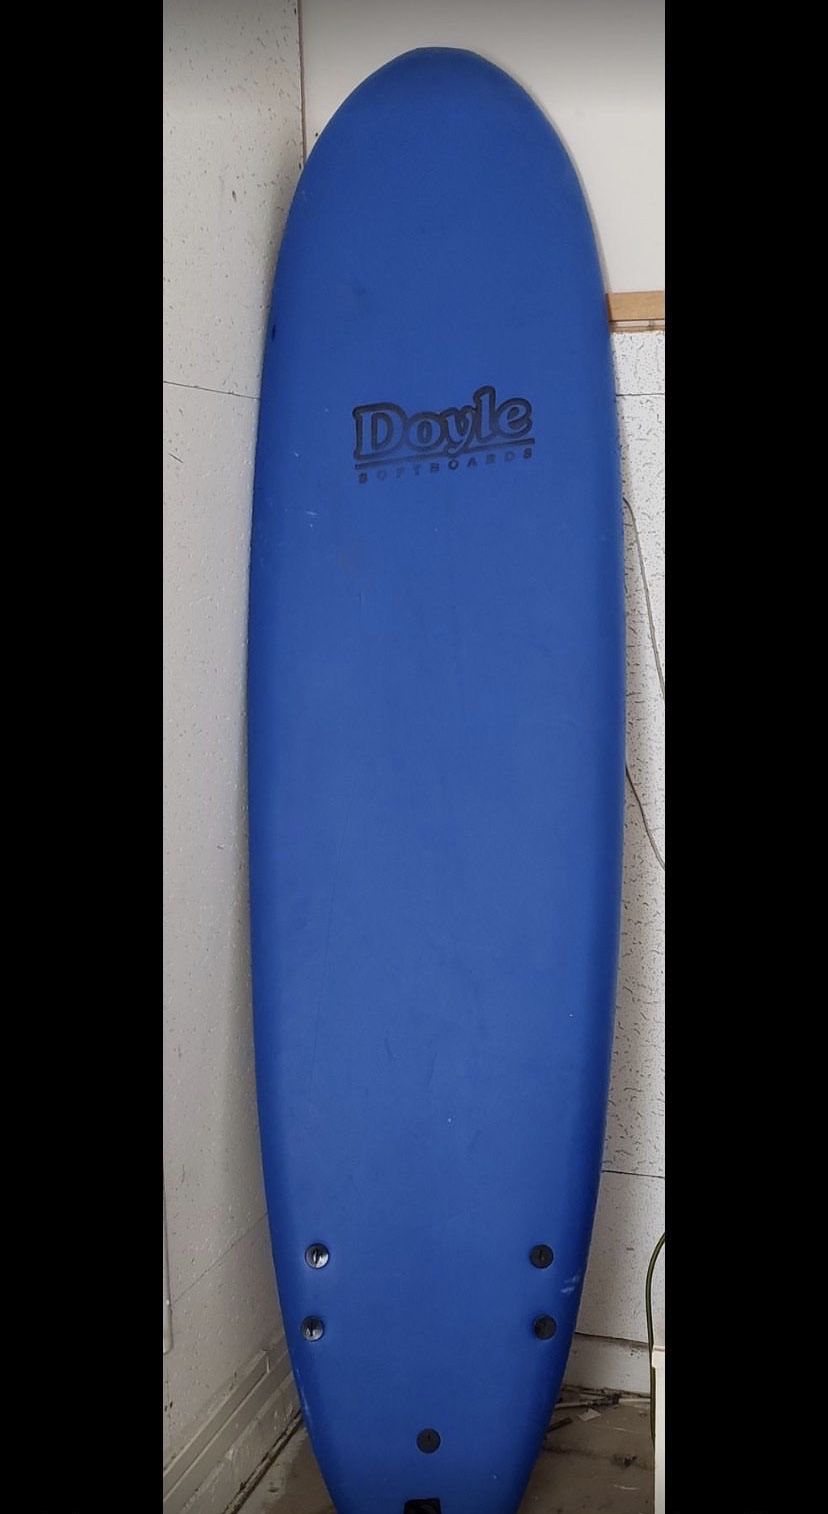 7’ ft Doyle Surboard